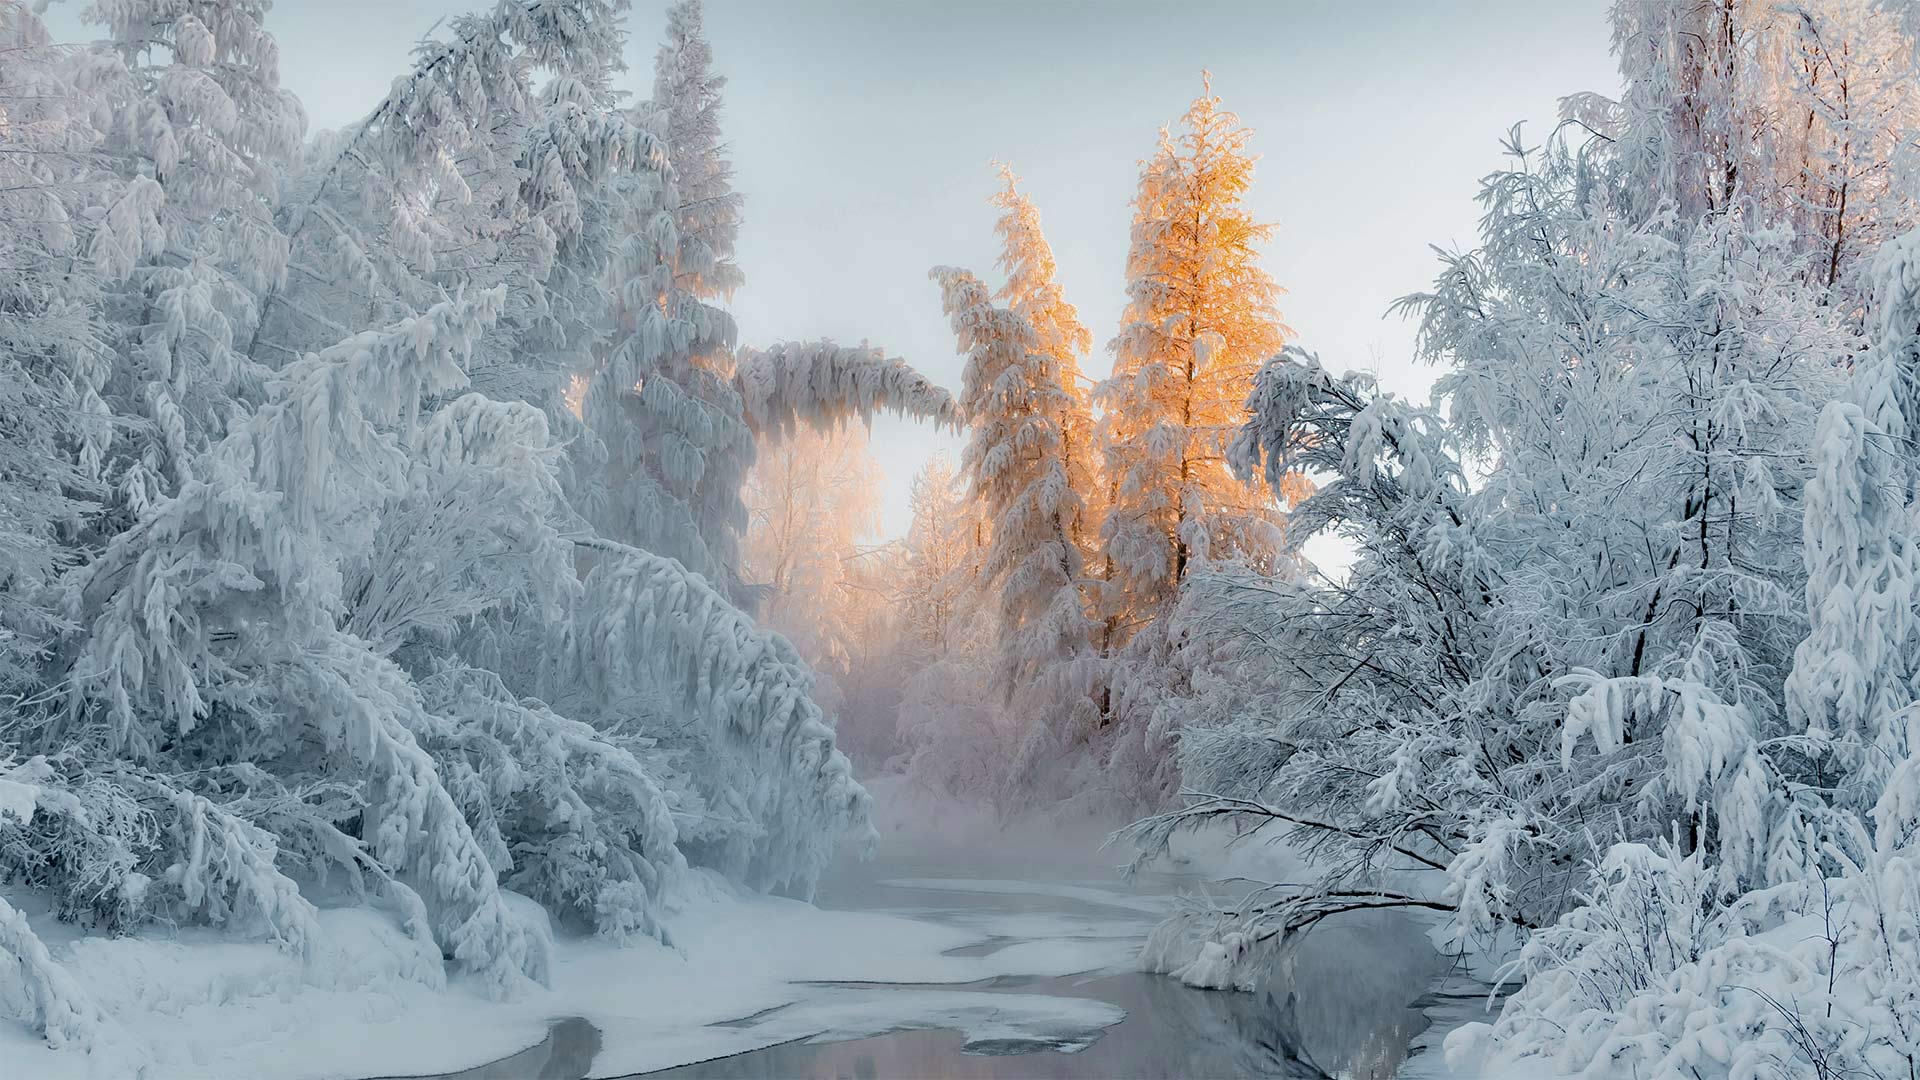 Winter in Oymyakon, Russia - Alexandr Berdicevschi/Getty Images)